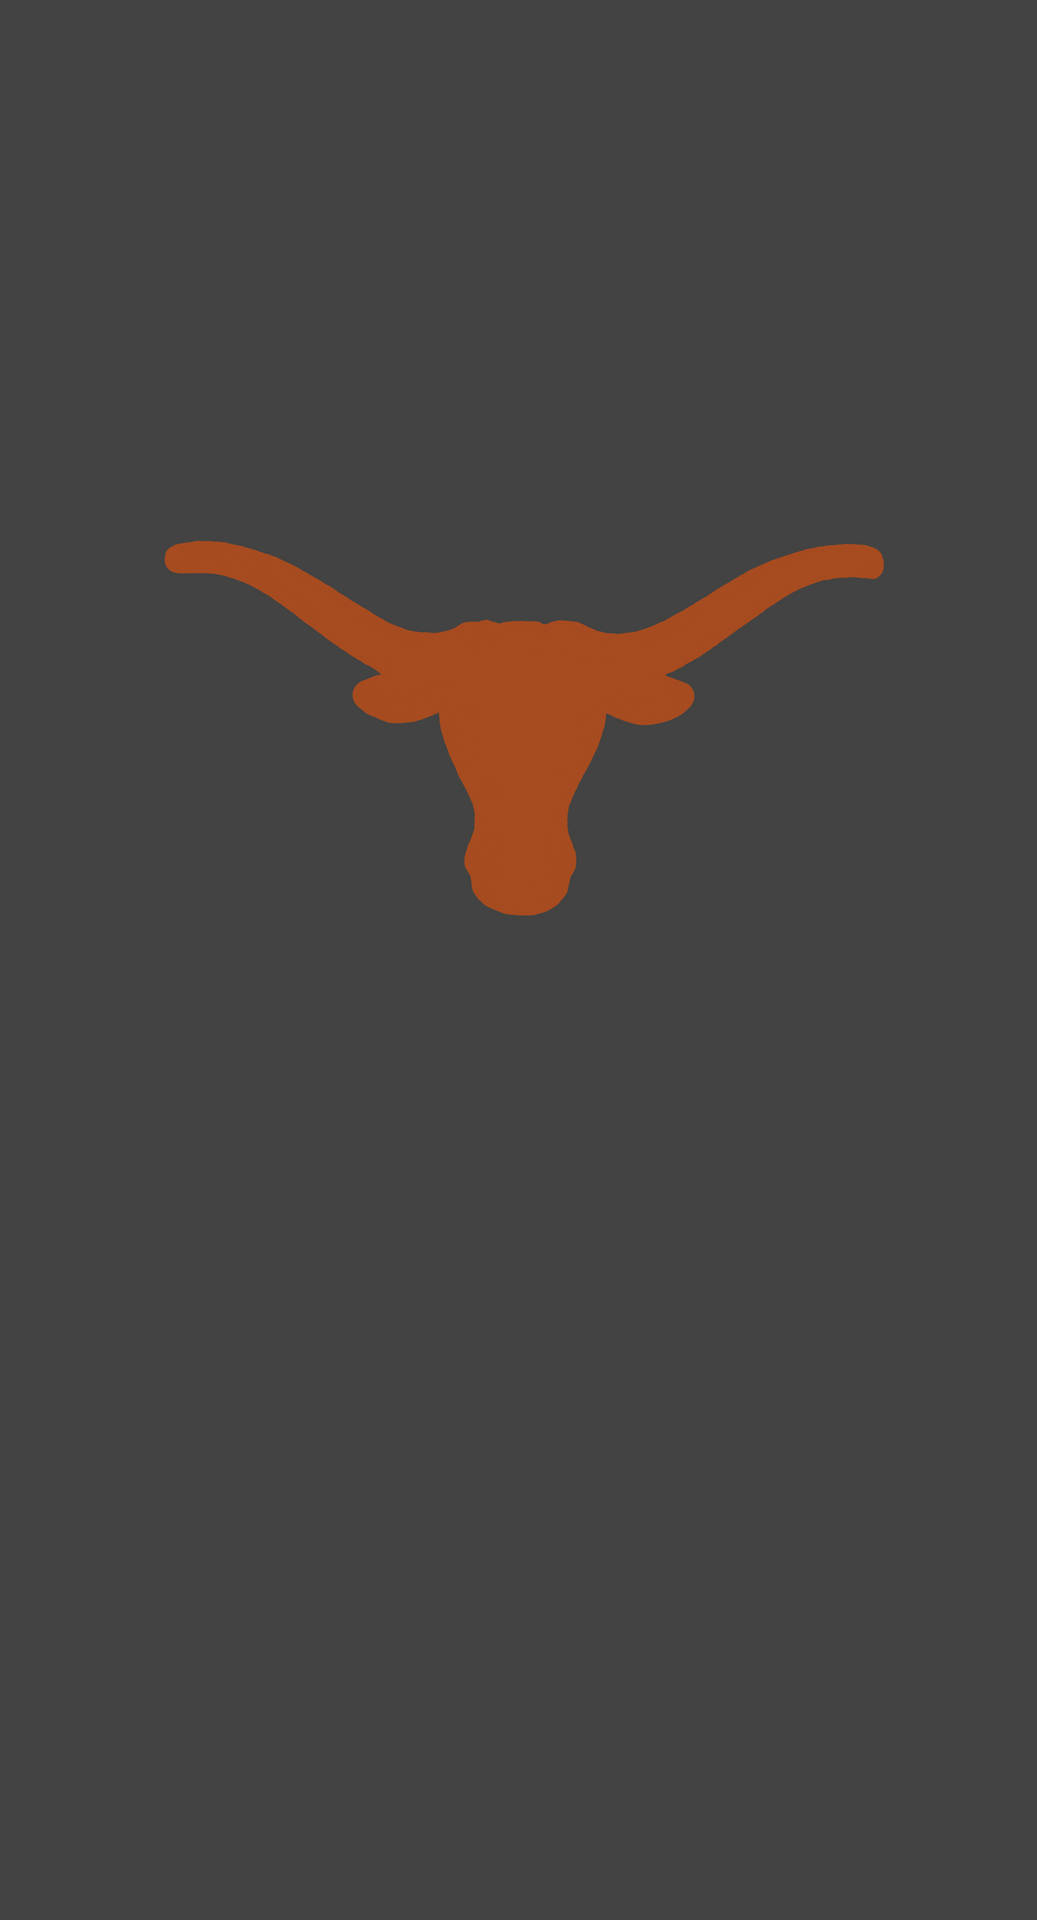 Logode La Universidad De Texas En Gris Fondo de pantalla